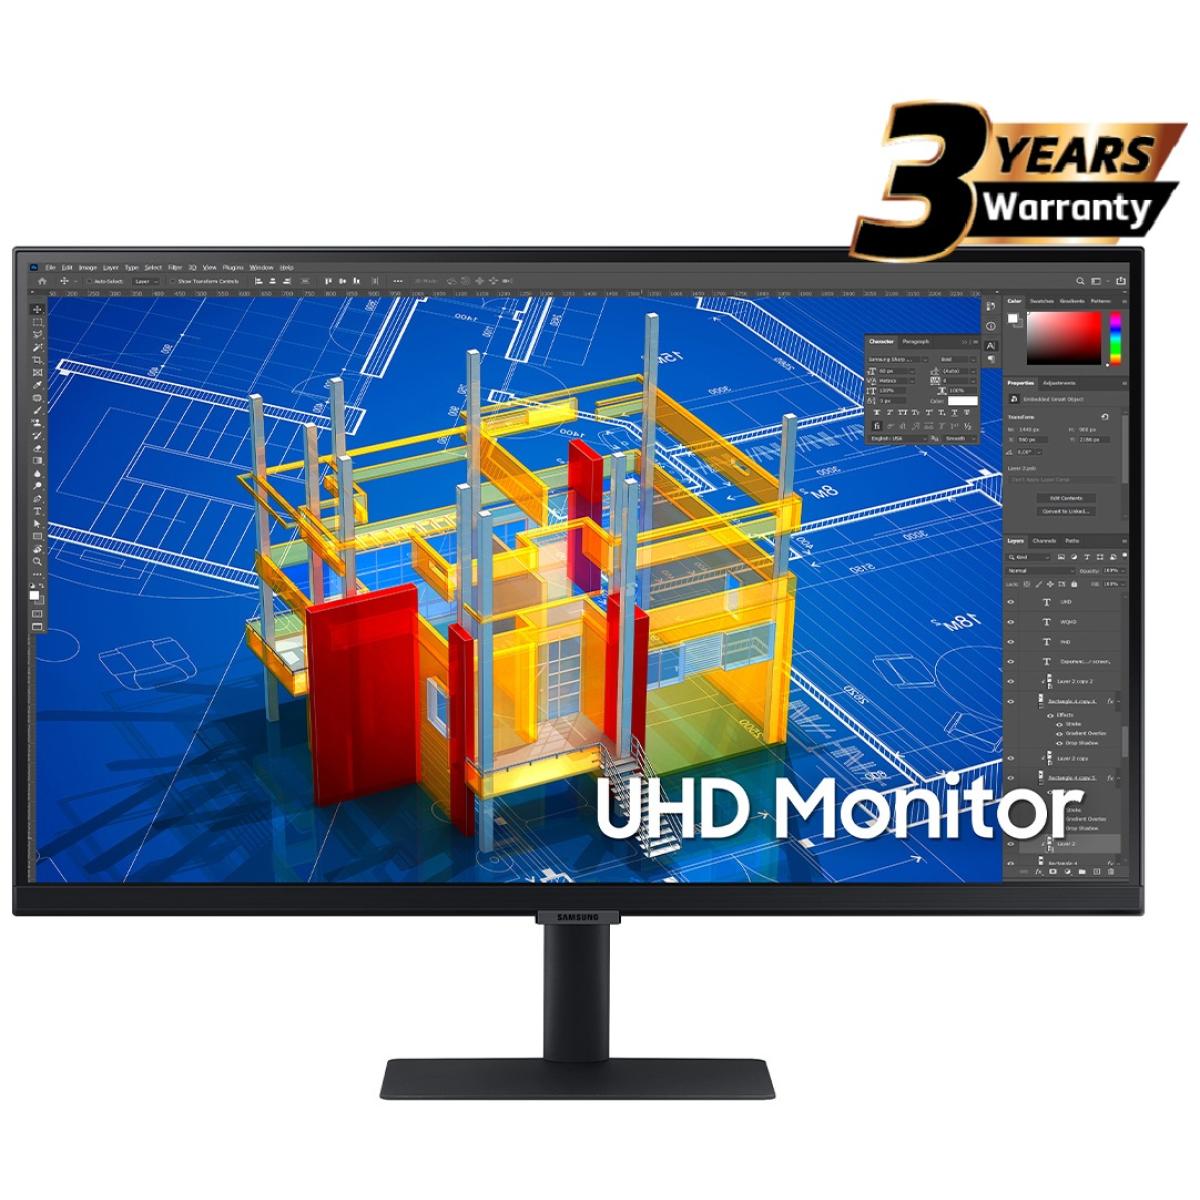 UHD Monitor with IPS panel and HDR شاشة سامسونج 27 بوصة